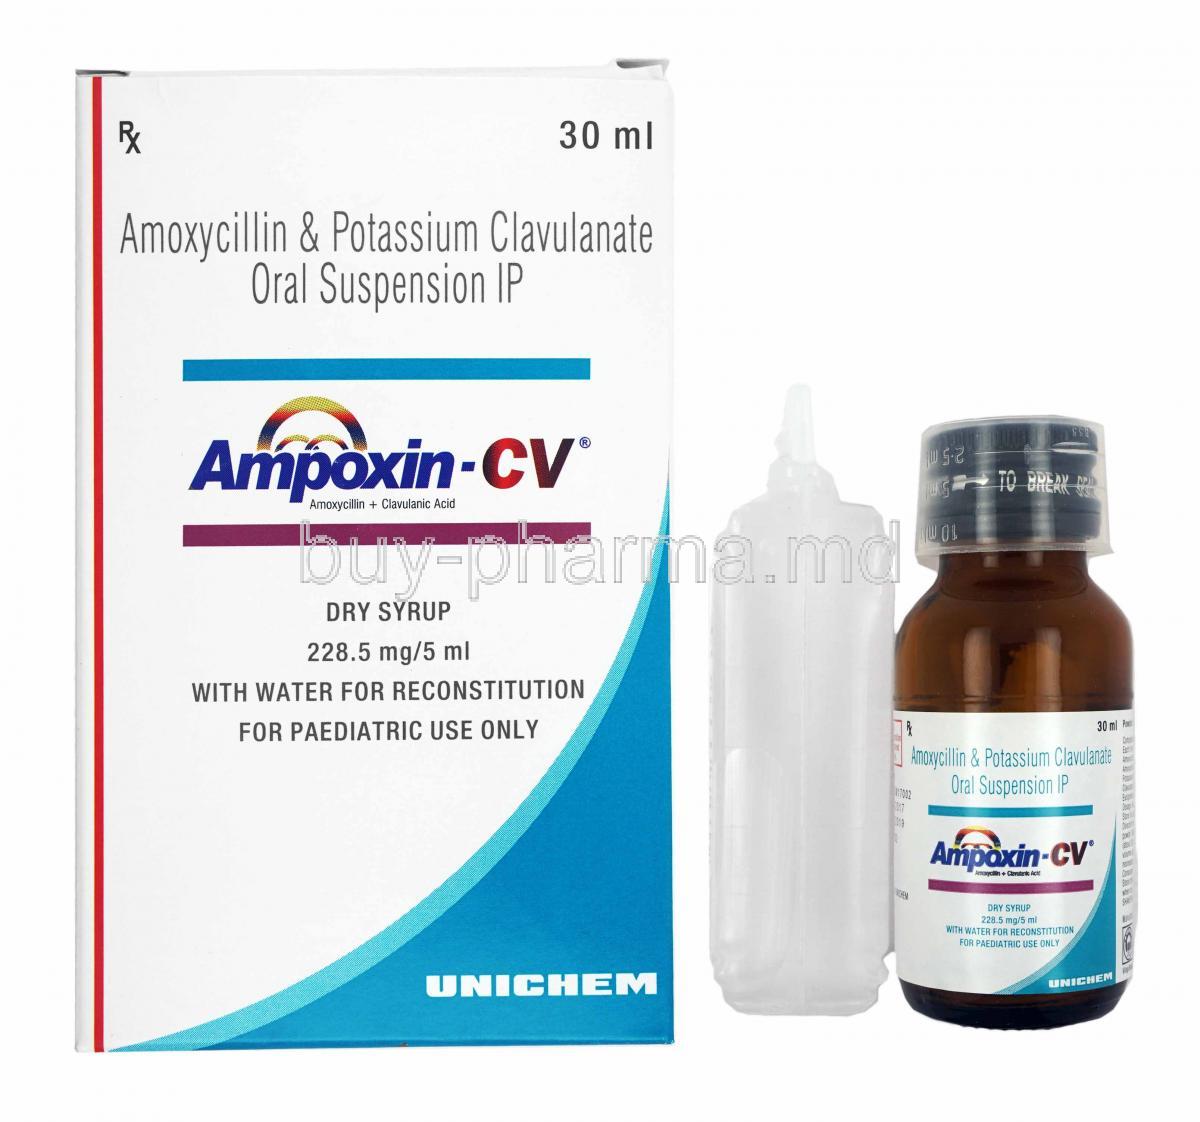 Ampoxin-CV Oral Suspension, Amoxycillin and Clavulanic Acid box and bottle